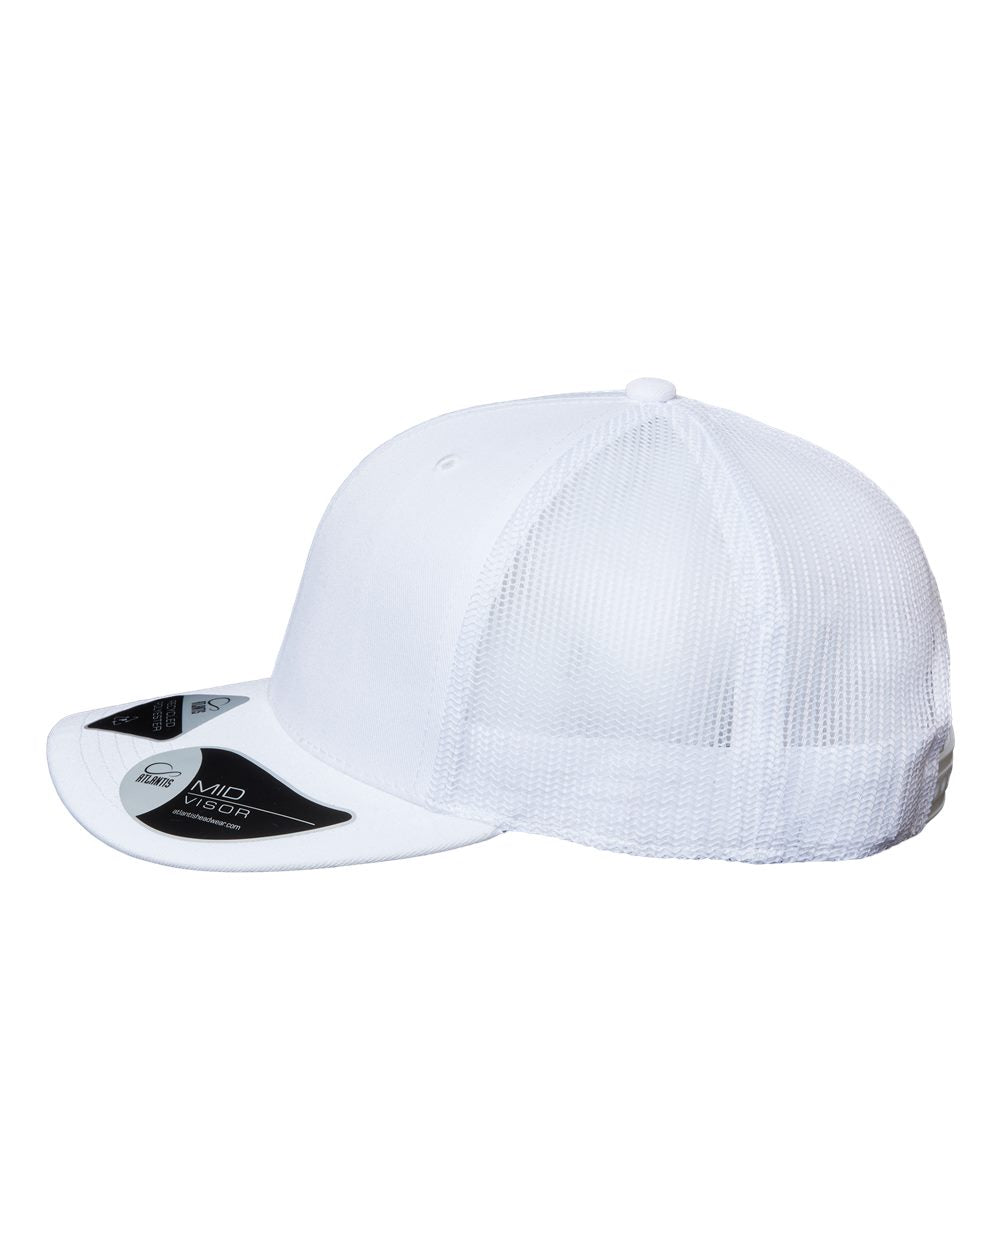 Customizable Atlantis Headwear Bryce Trucker Cap in white